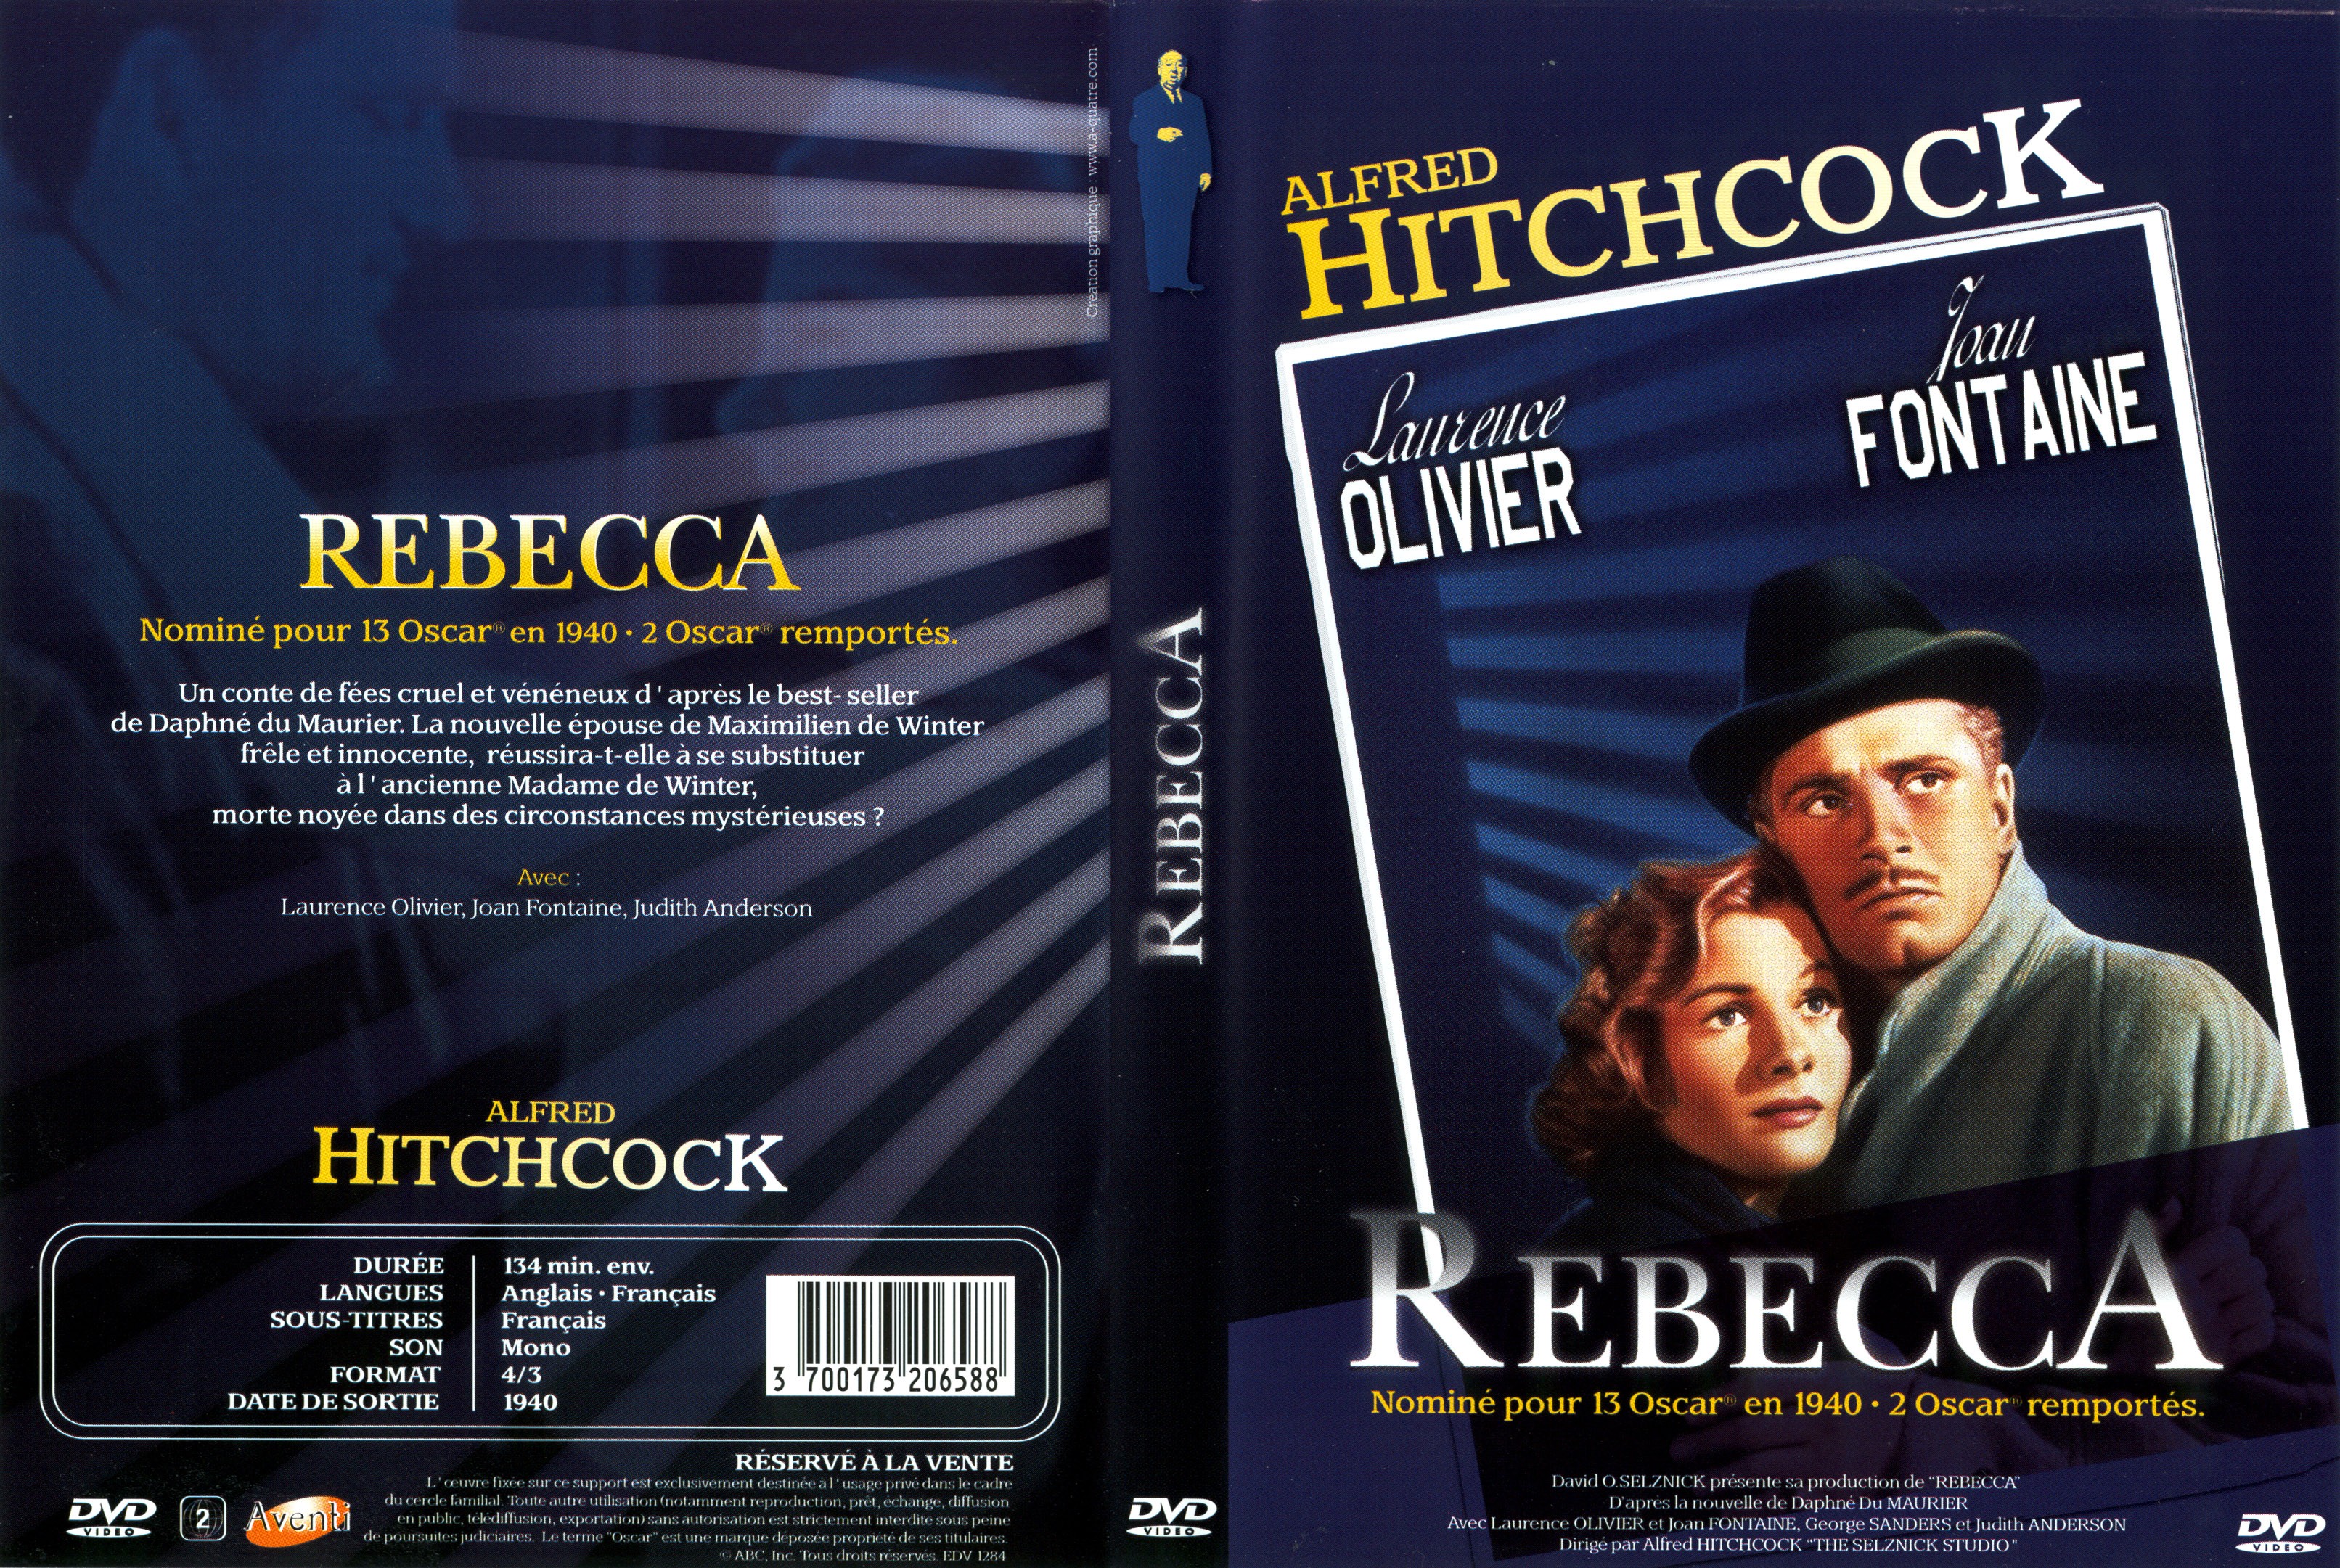 Jaquette DVD Rebecca v2